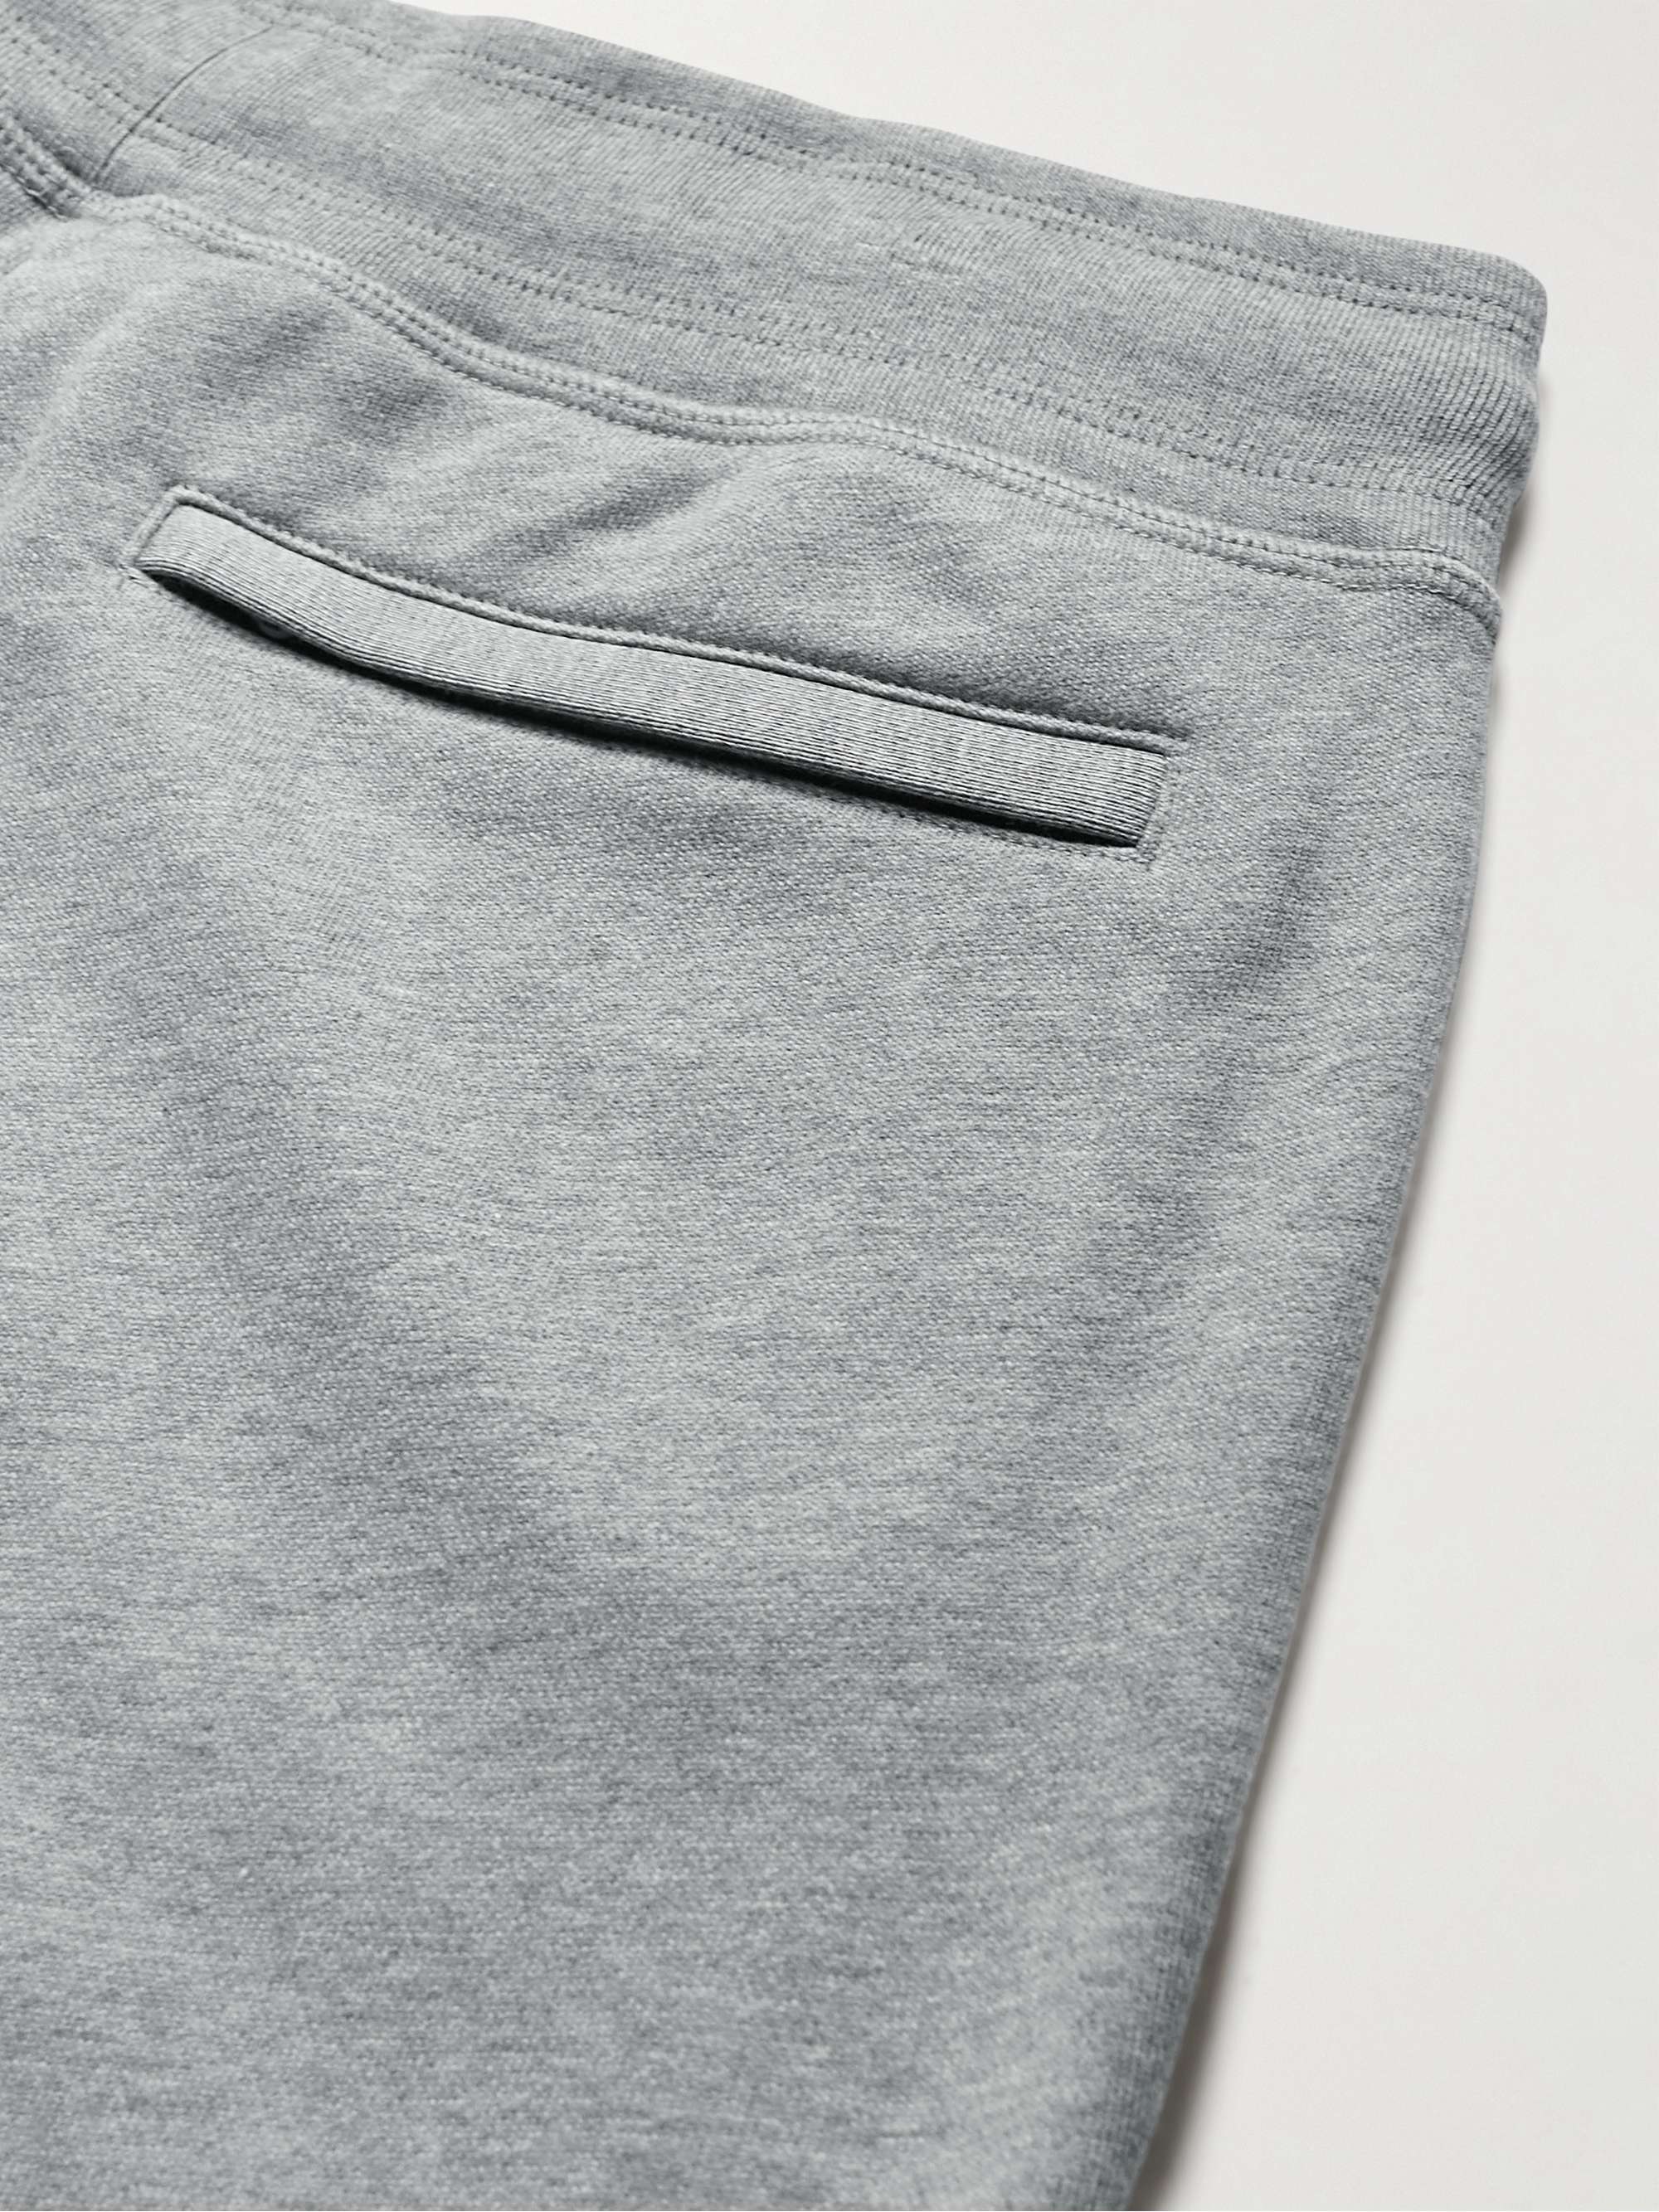 CANADA GOOSE Huron Tapered Logo-Appliquéd Cotton-Jersey Sweatpants